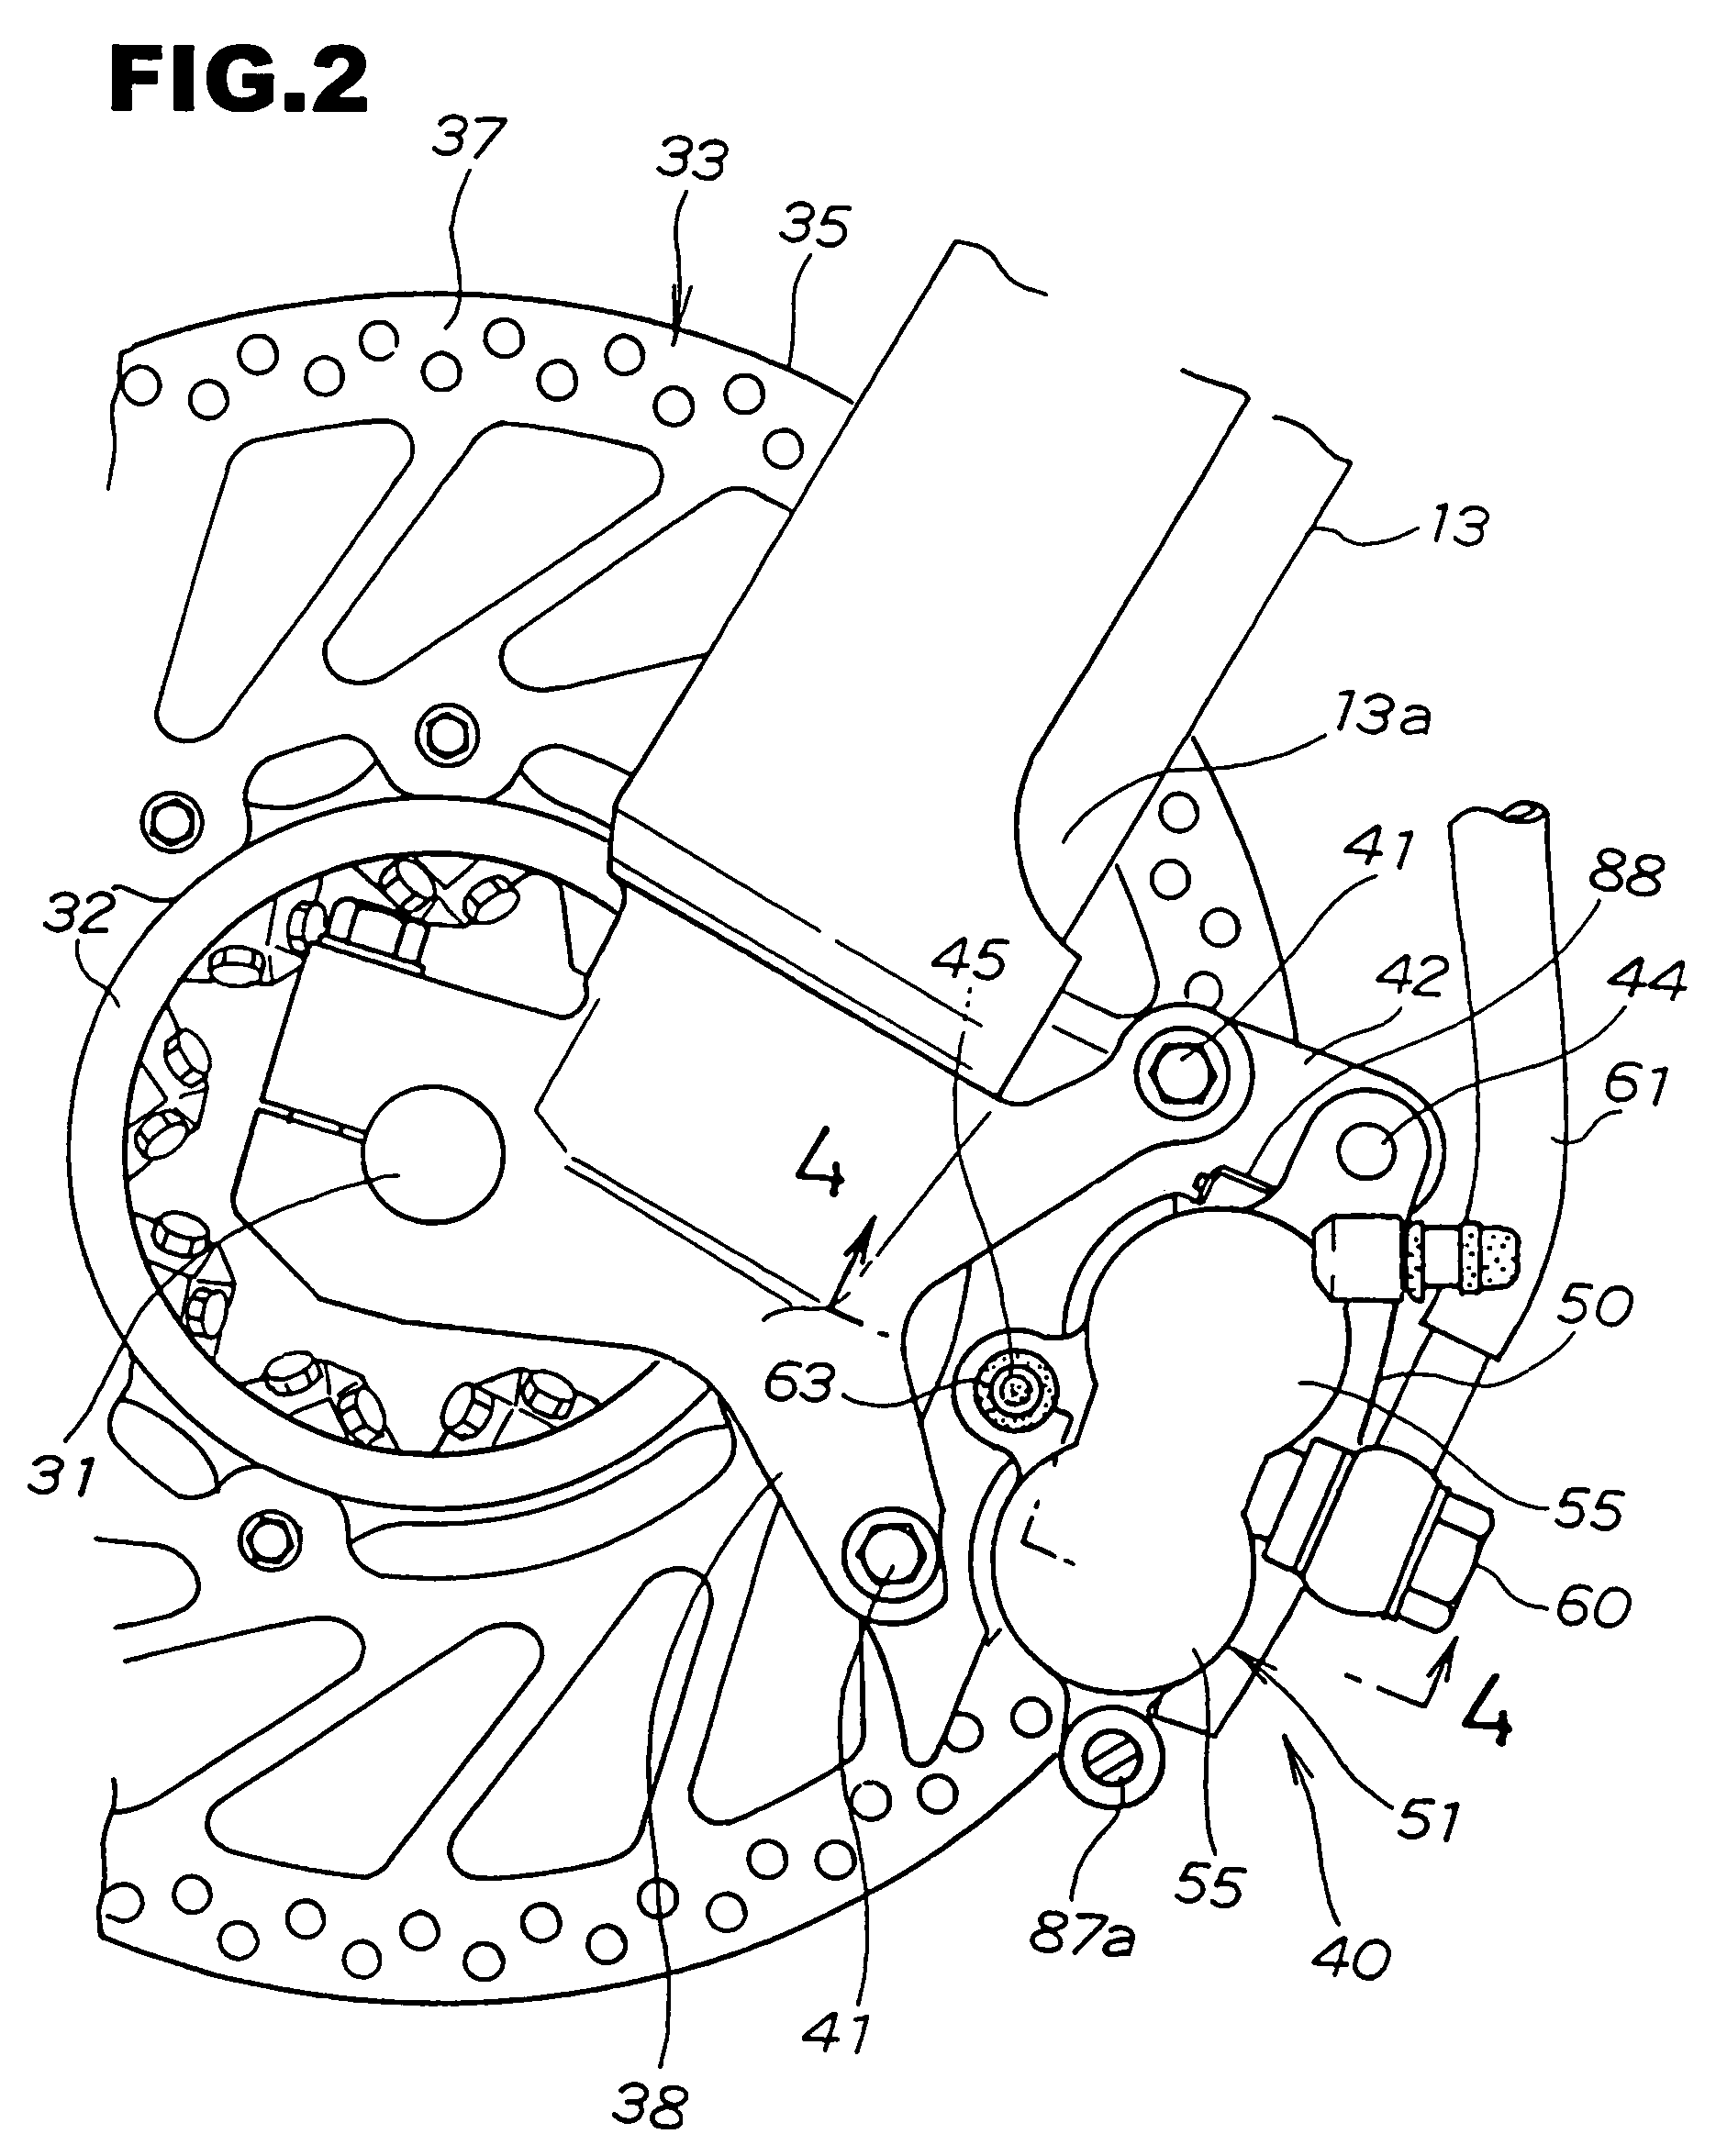 Disk brake unit for motorcycle